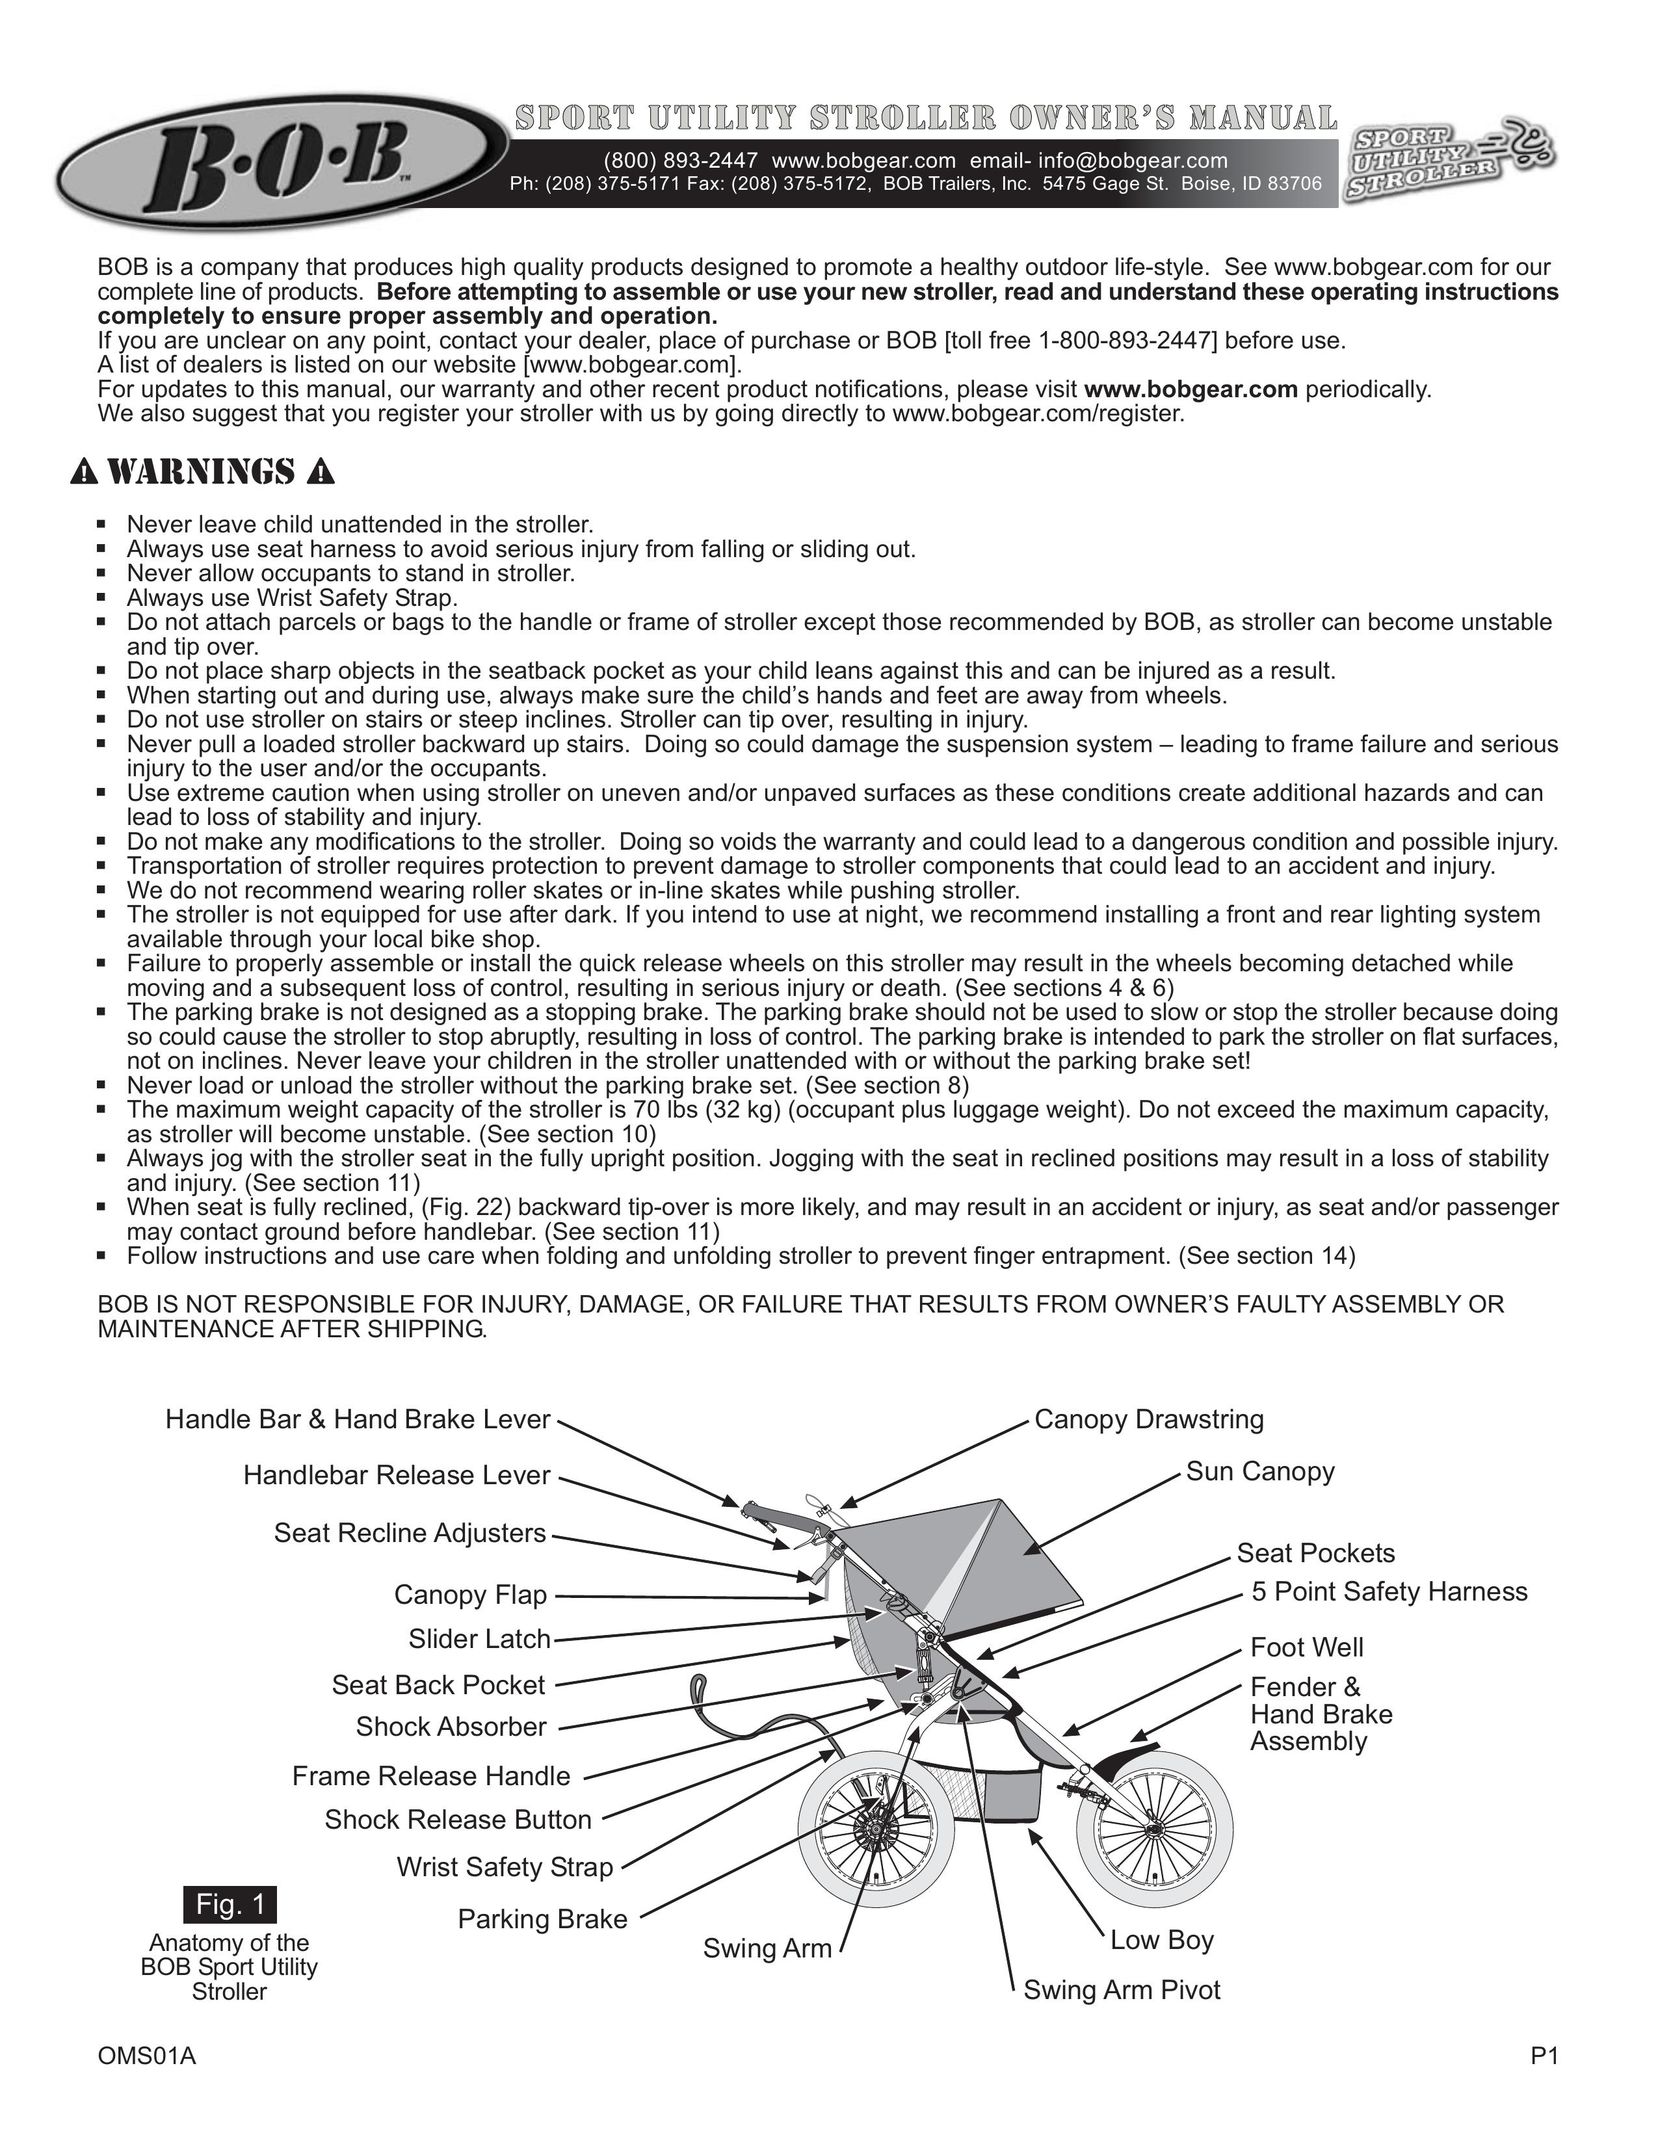 BOB OMS09B Stroller User Manual